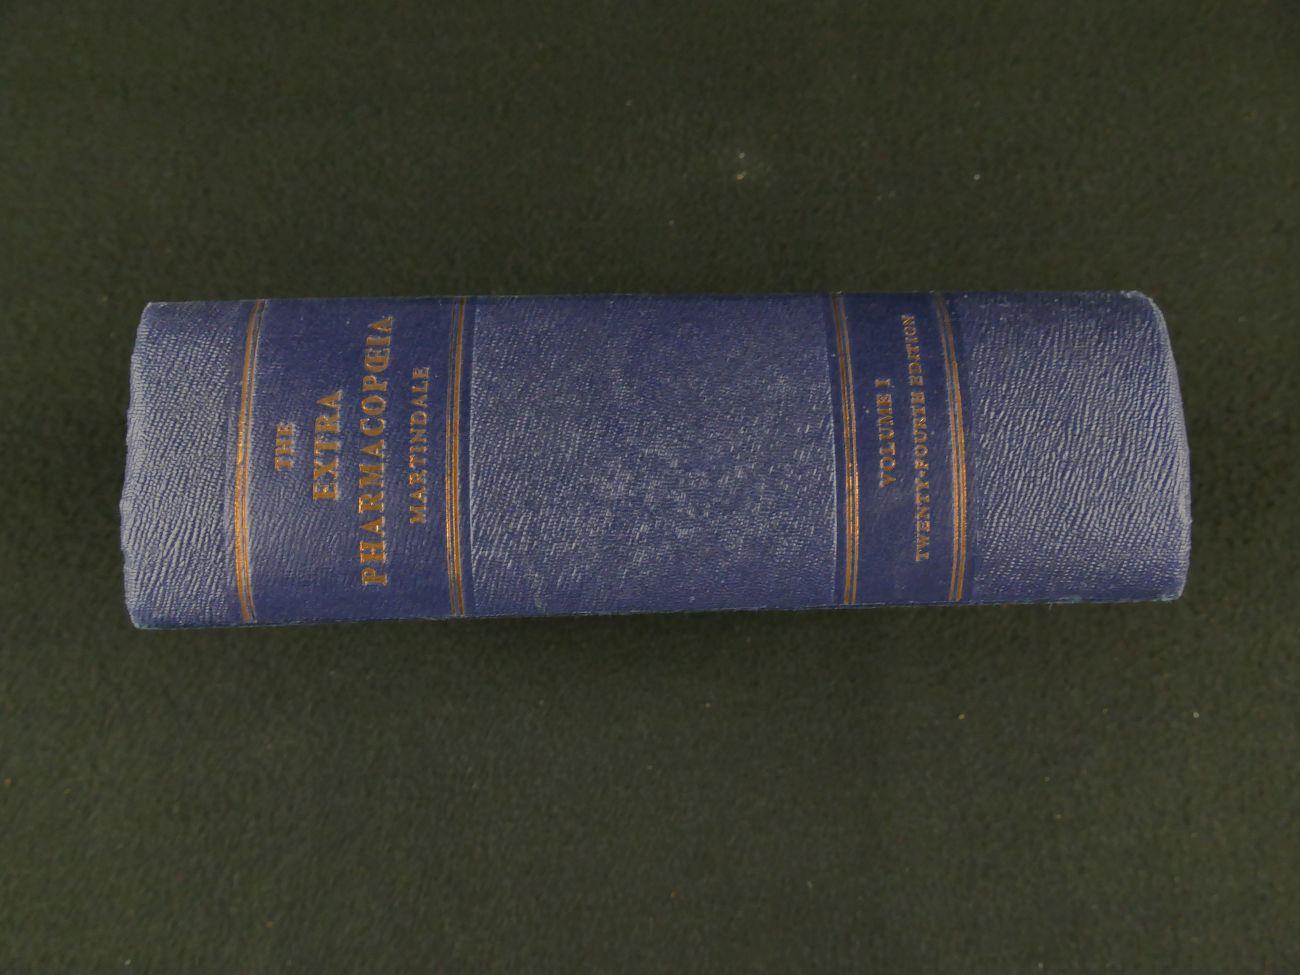 Martindale - The extra pharmacopoeia volume 1 twenty-fourth edition